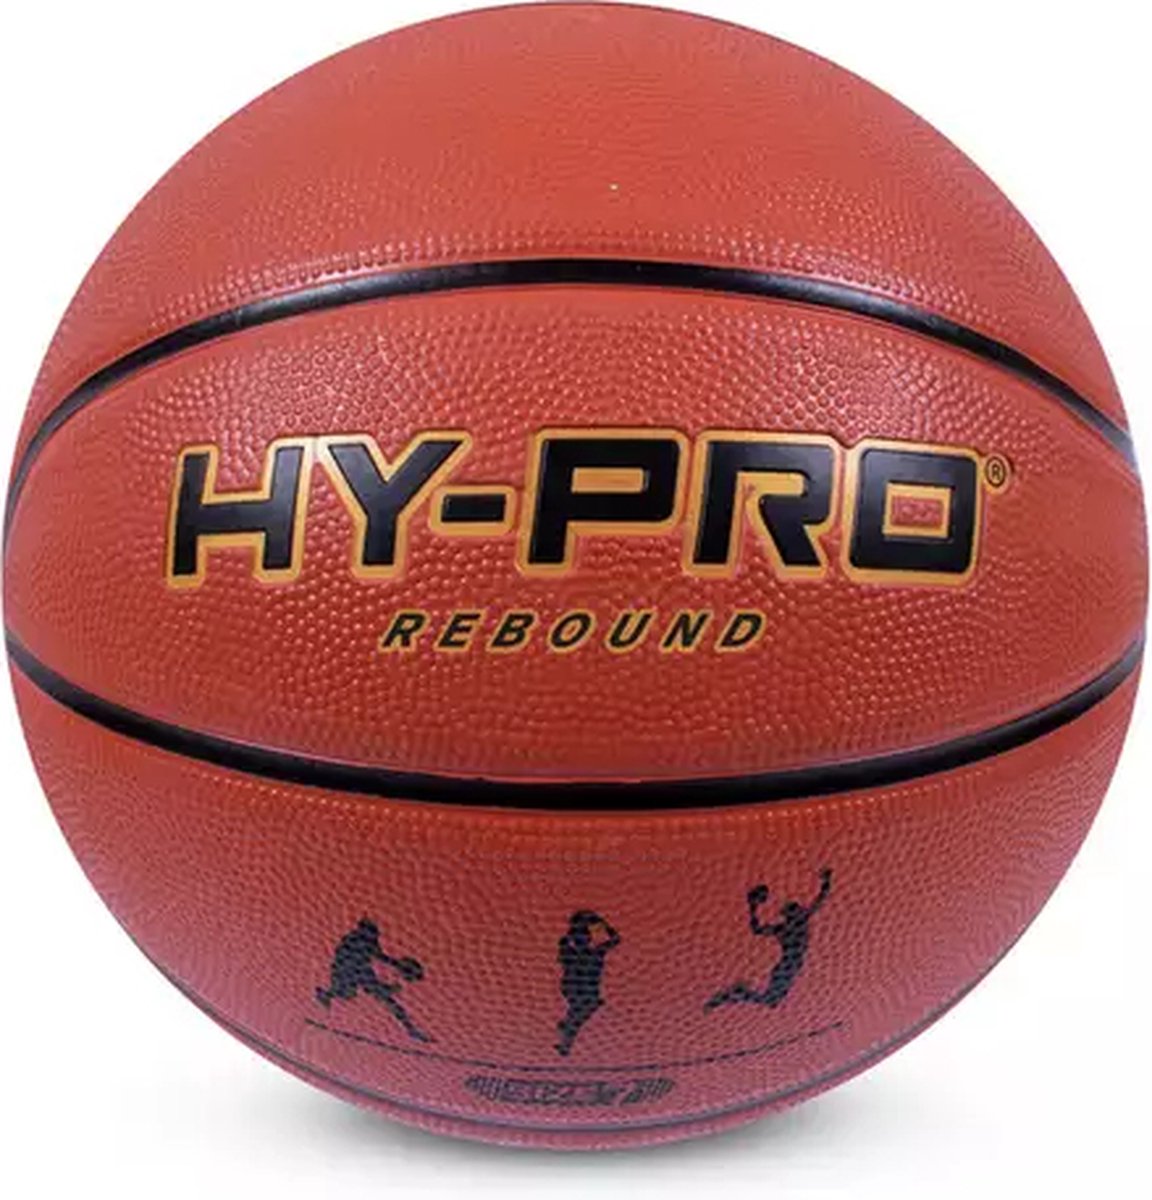 Hy-Pro Size 7 Rubber Basketbal